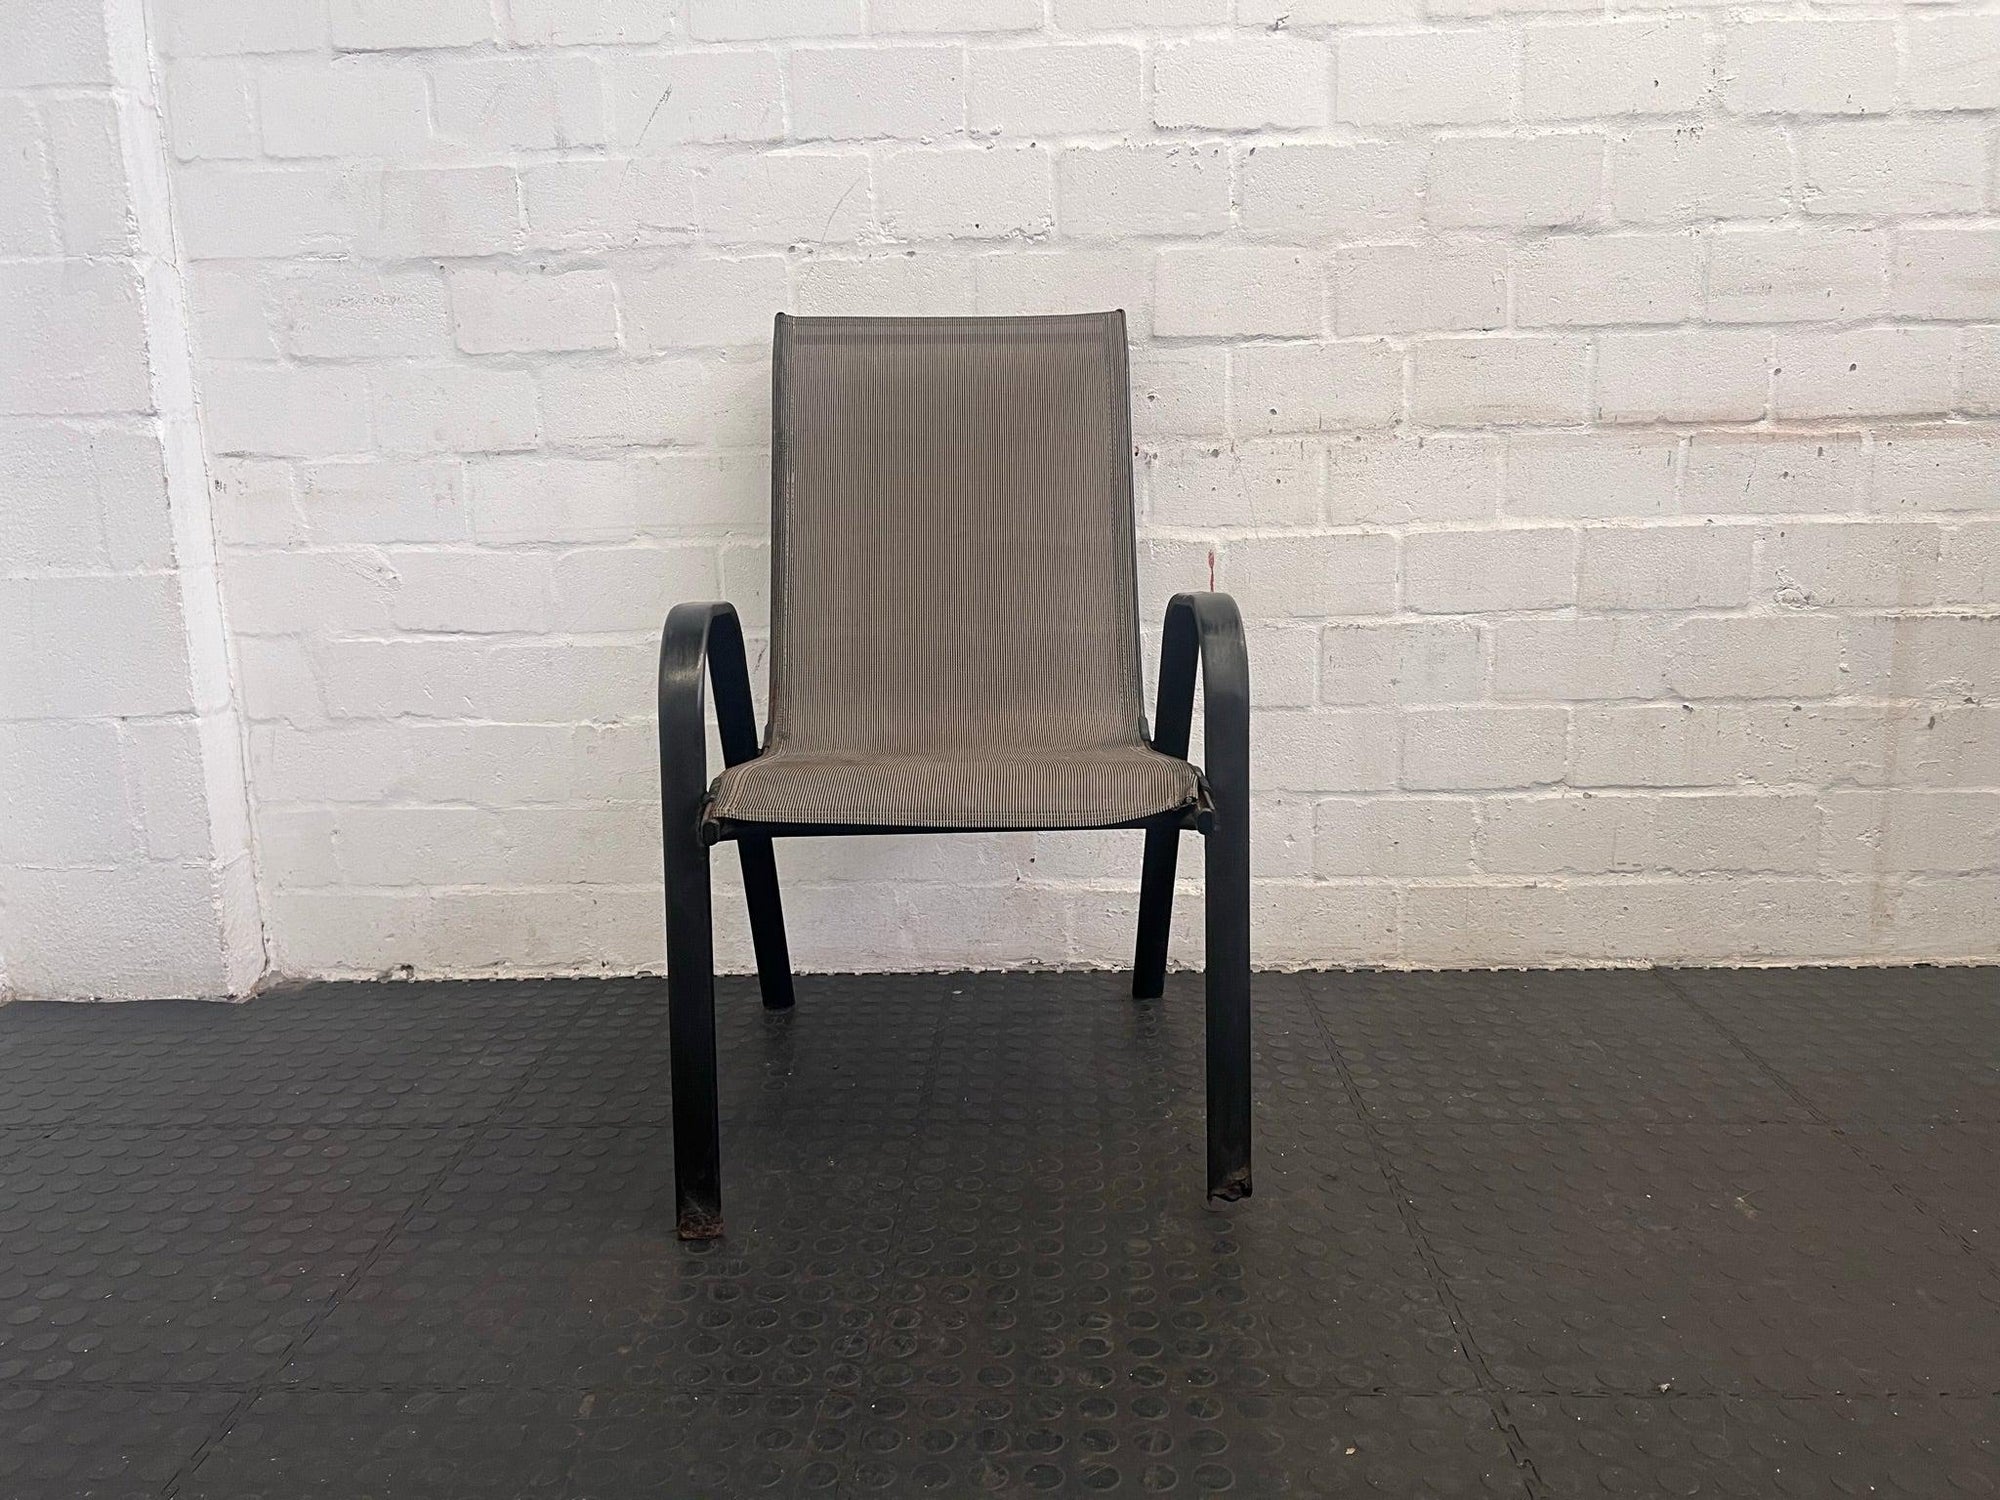 Grey Steel Framed Patio Chair (Damage To Leg/Slightly Shorter)